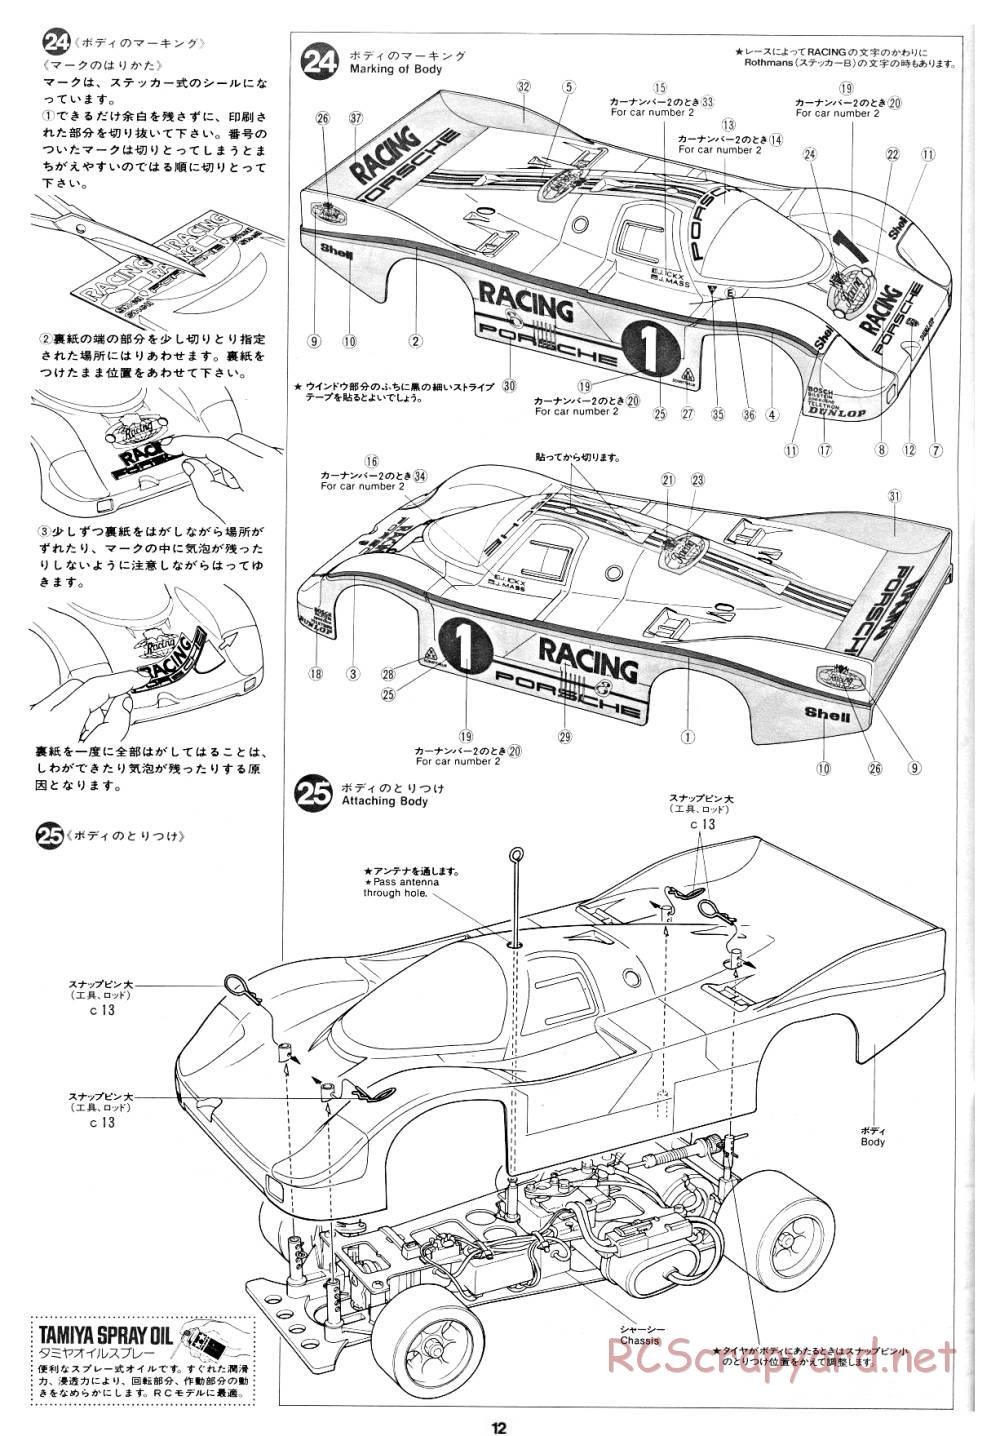 Tamiya - Porsche 956 - RM MK.5 - 58042 - Manual - Page 12